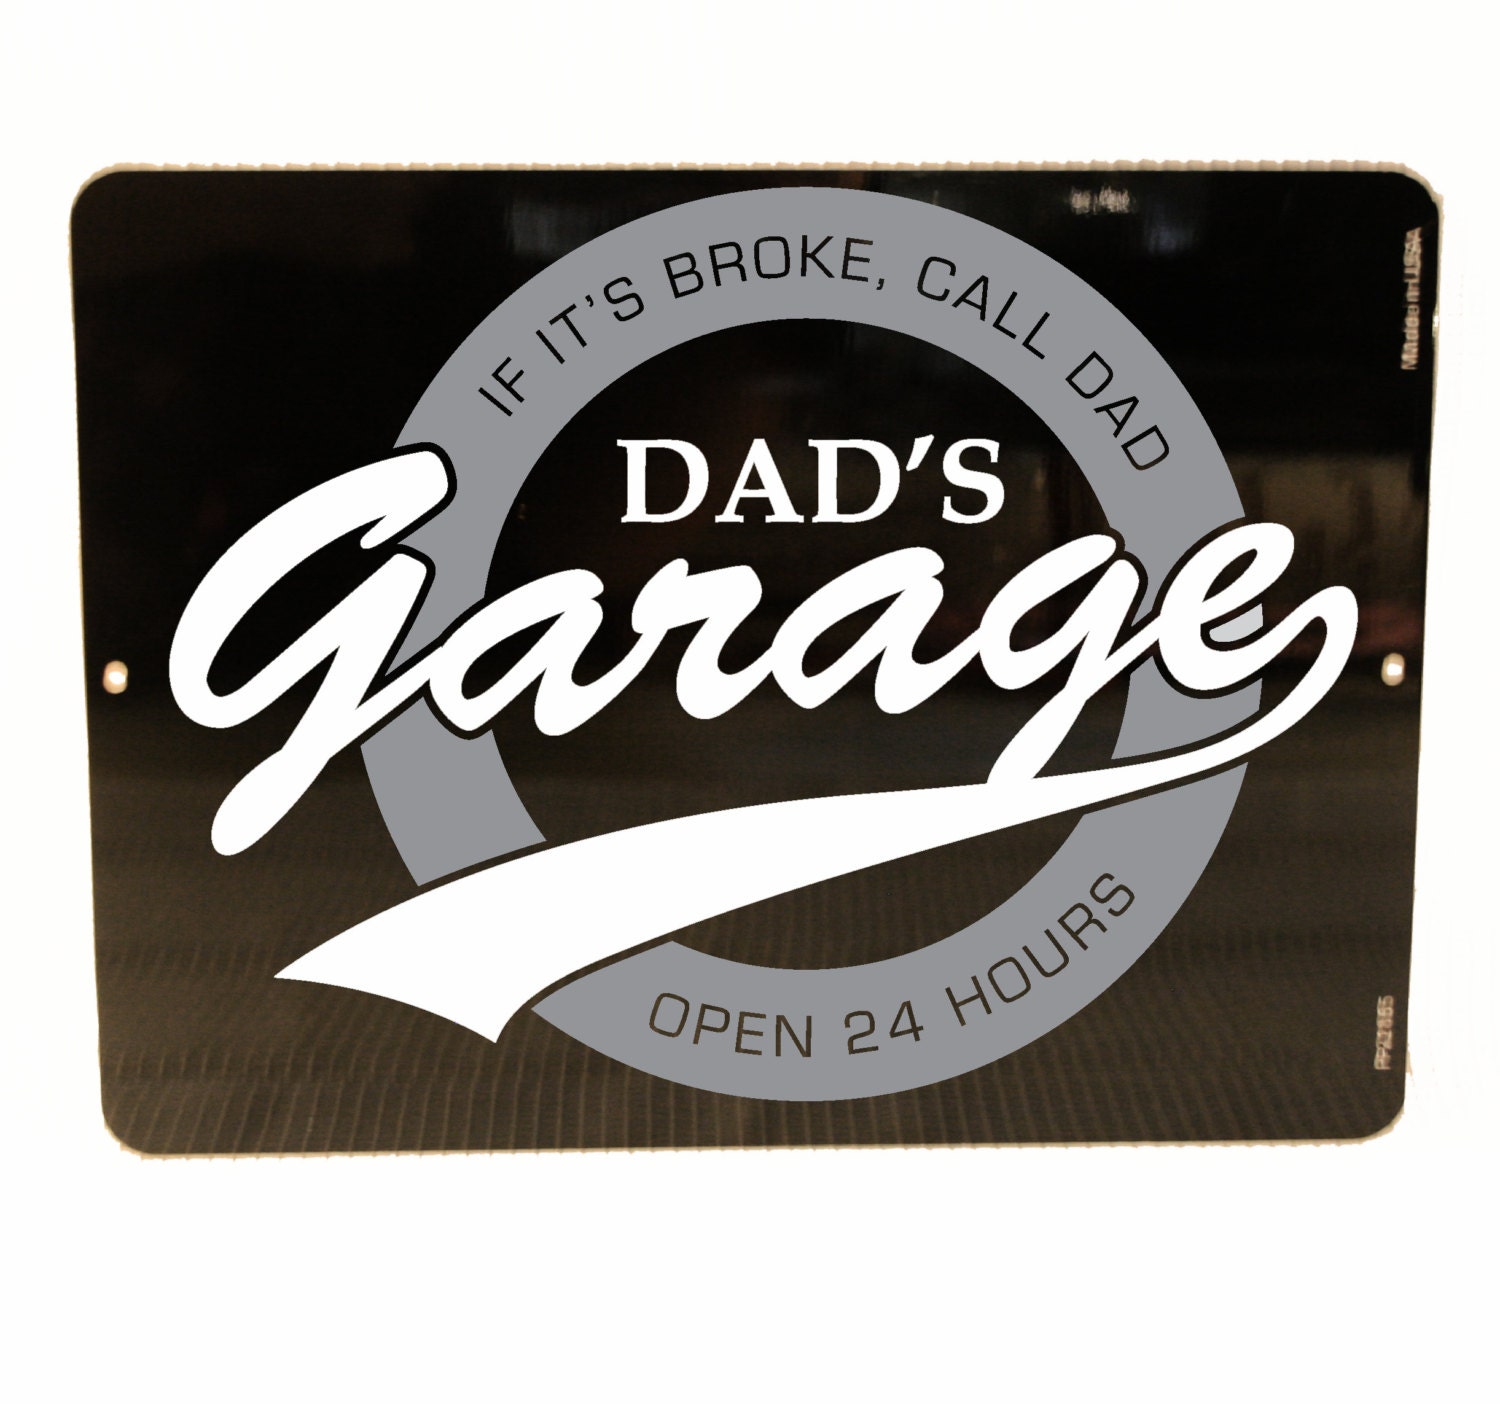 Download Call Dad's Garage Sign 12 x 9 Garage sign